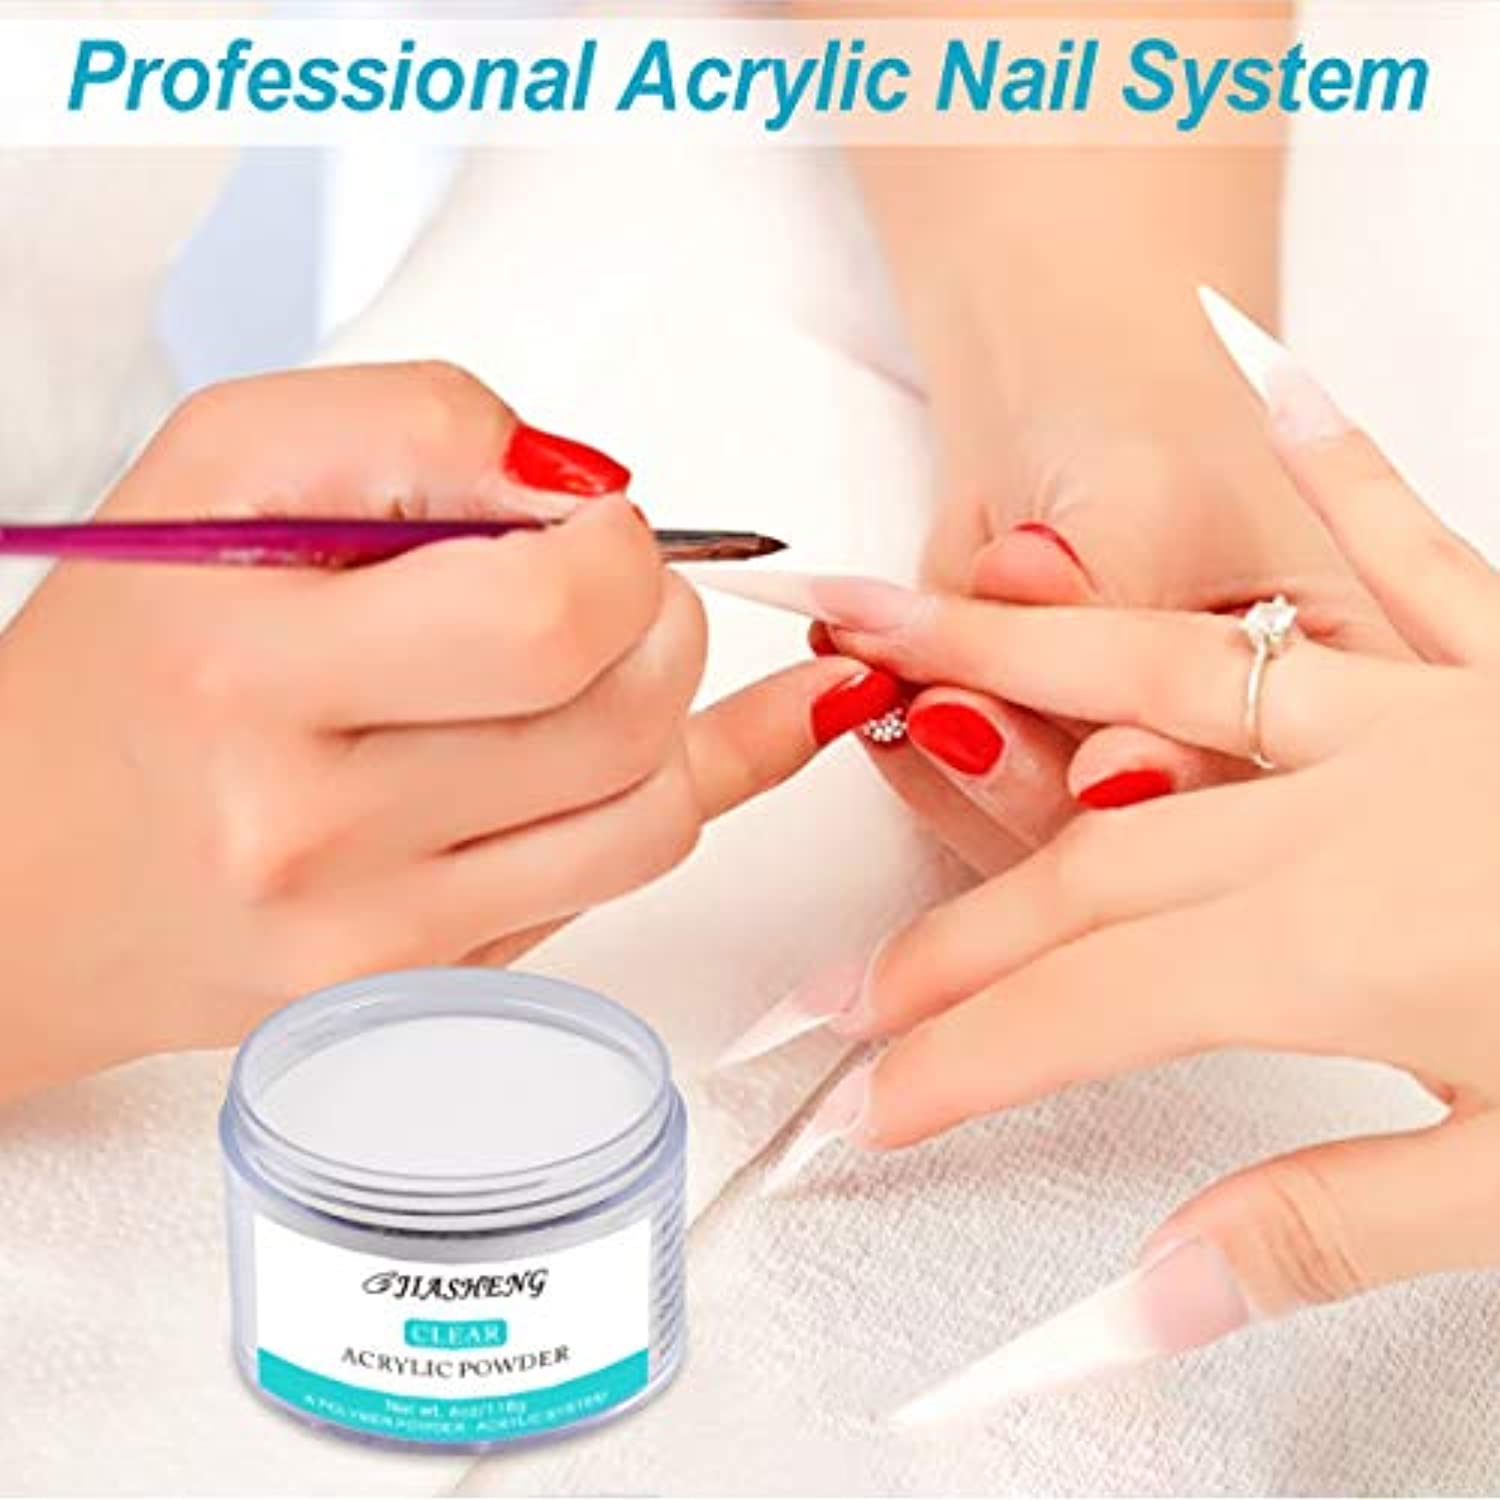 Clear Acrylic Powder, 4oz Acrylic Powder, Professional Acrylic Nail Kit Nail Extension System Acrylic Nails Powder 118g